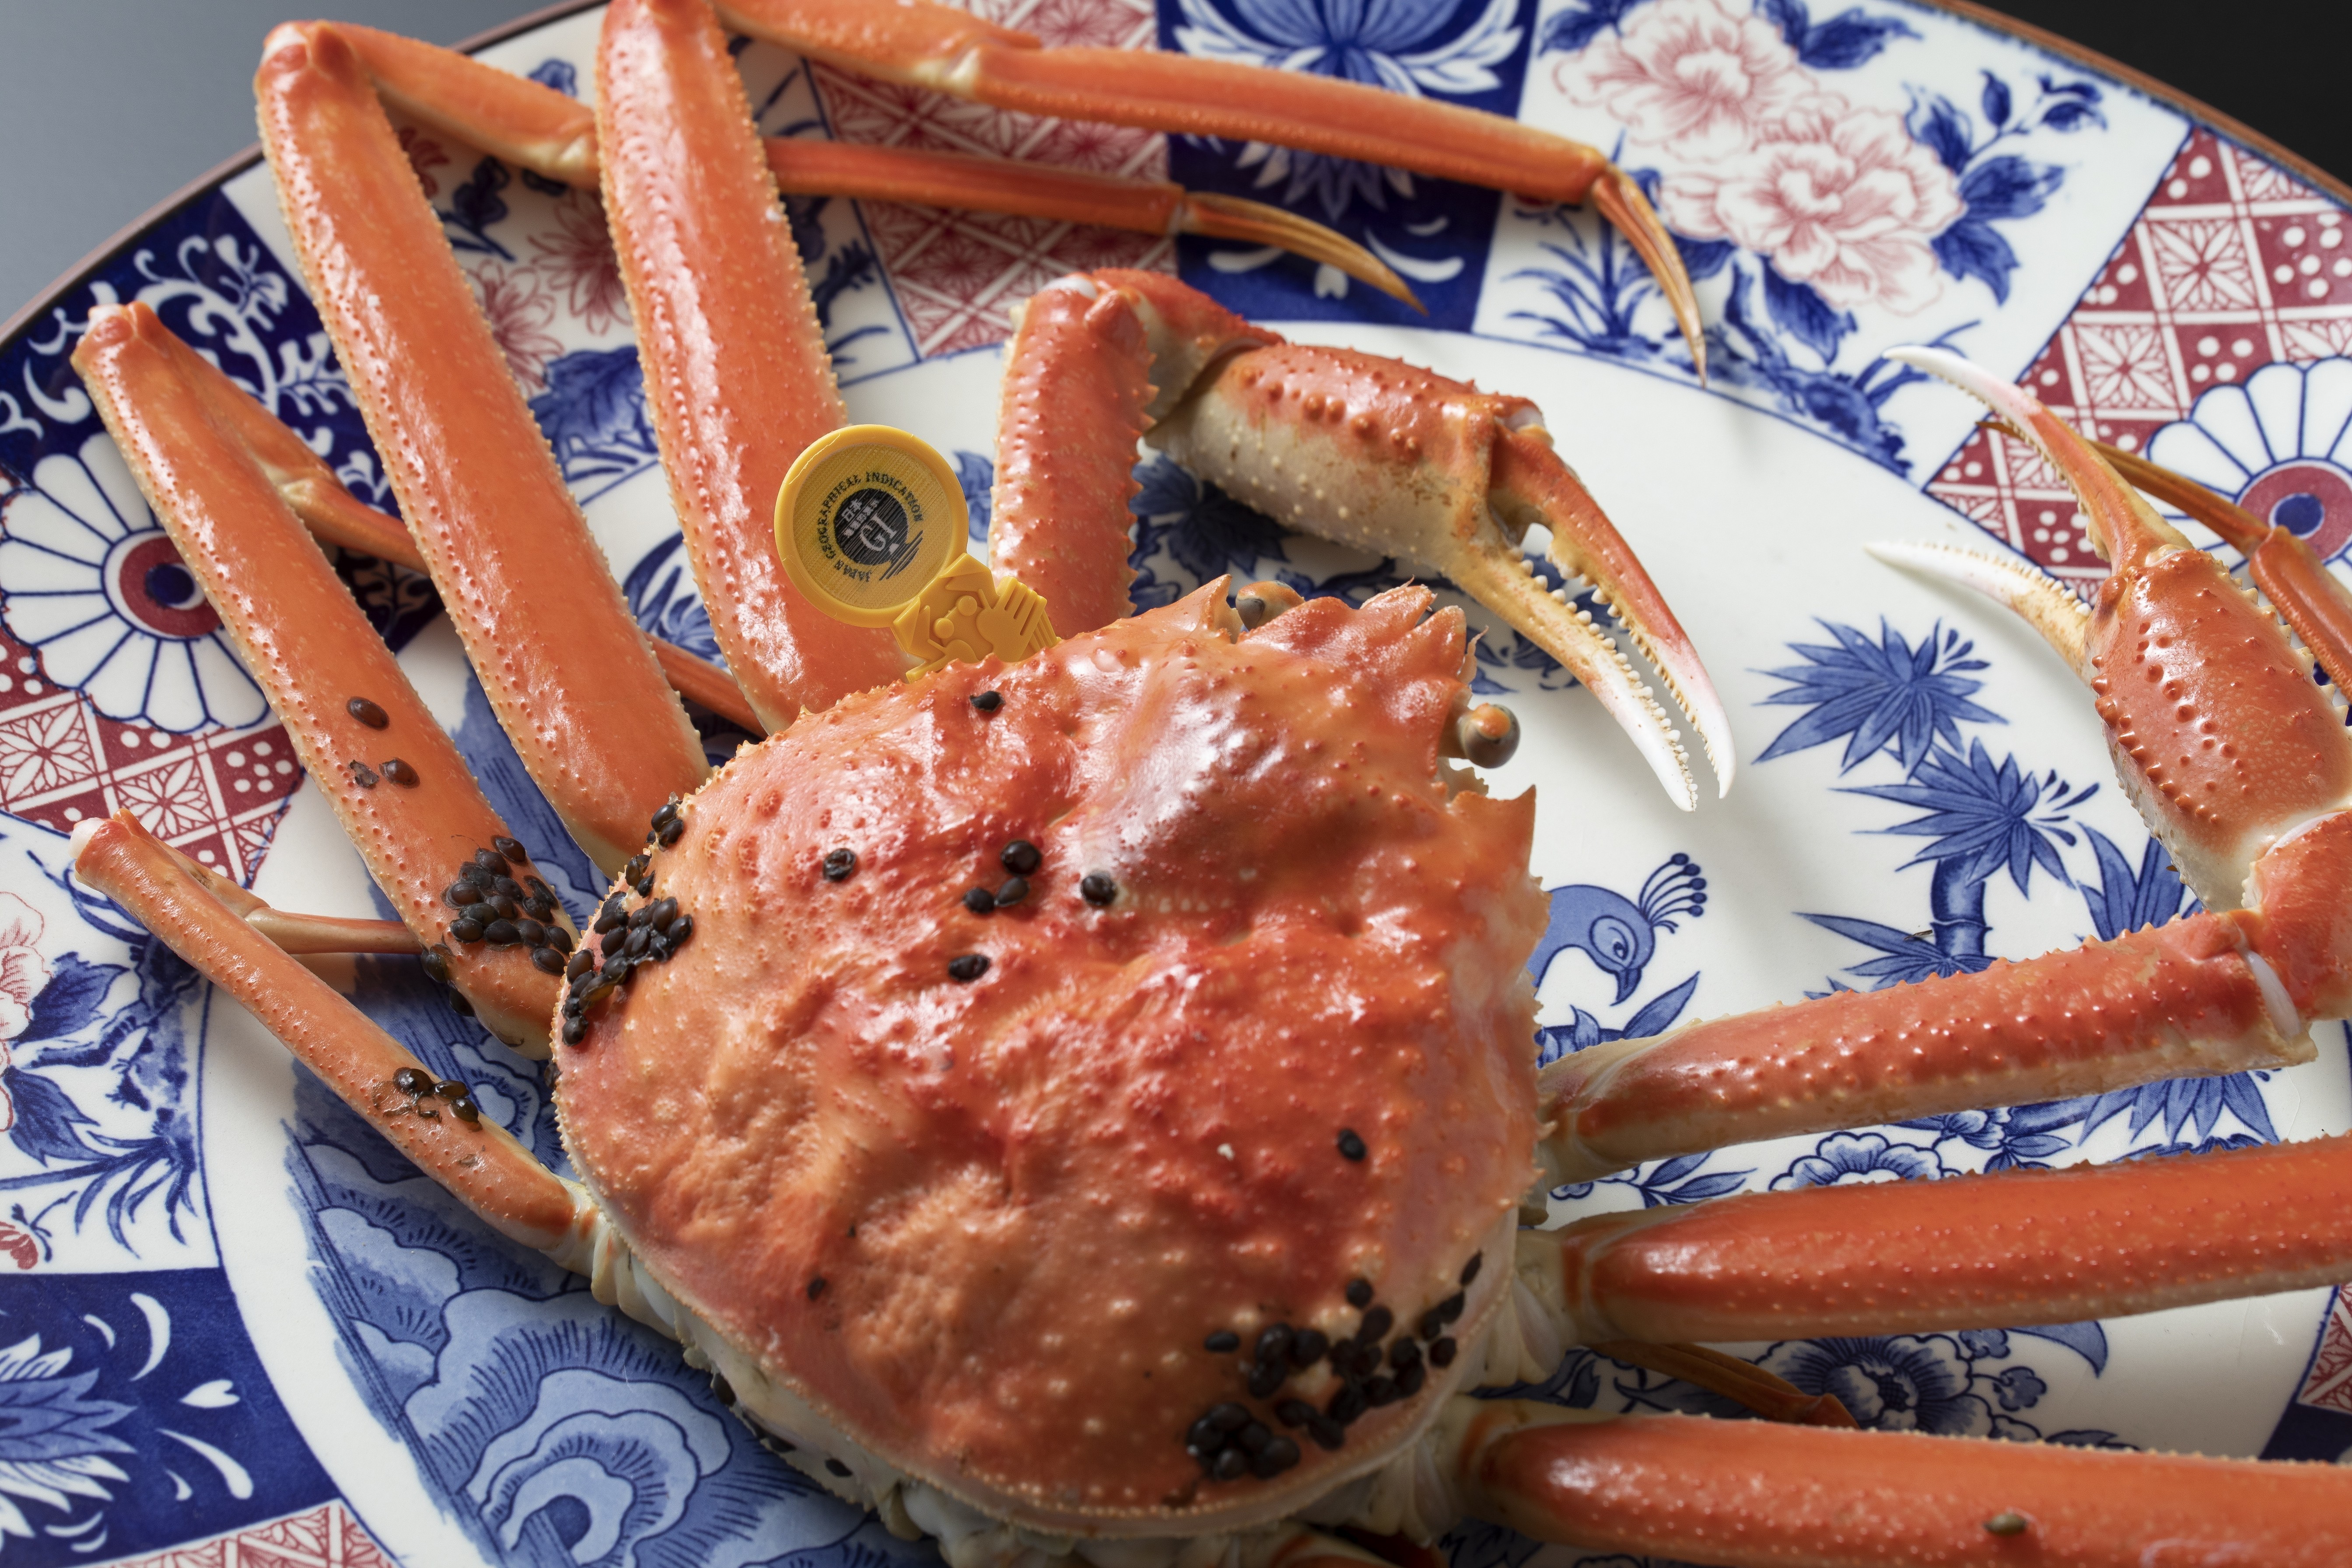 How to distinguish Fukui Prefecture's delicious Echizen crab?